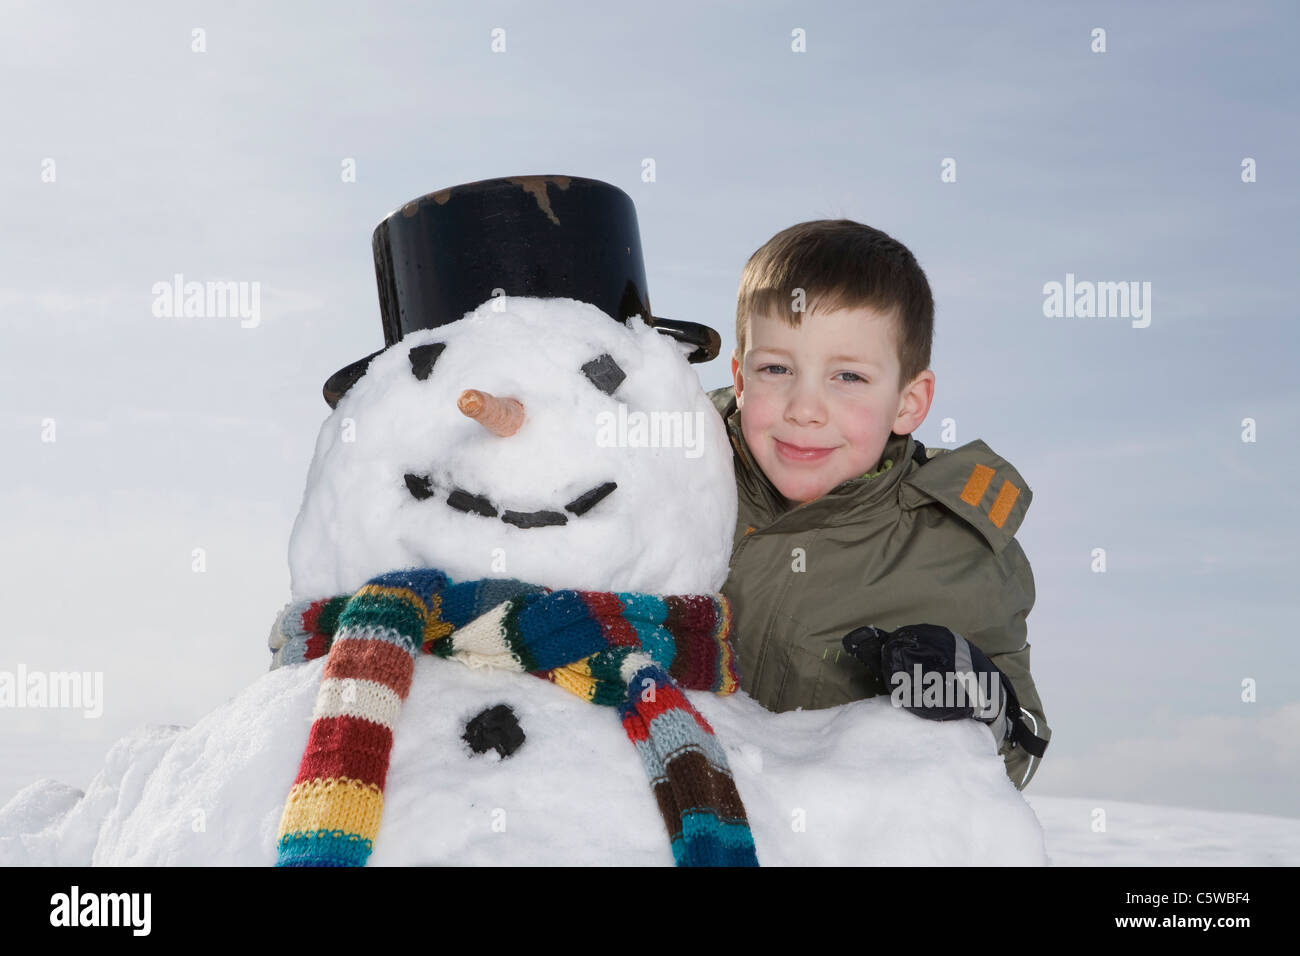 Germany, Bavaria, Munich, Boy (8-9) standing next to snowman, portrait Stock Photo